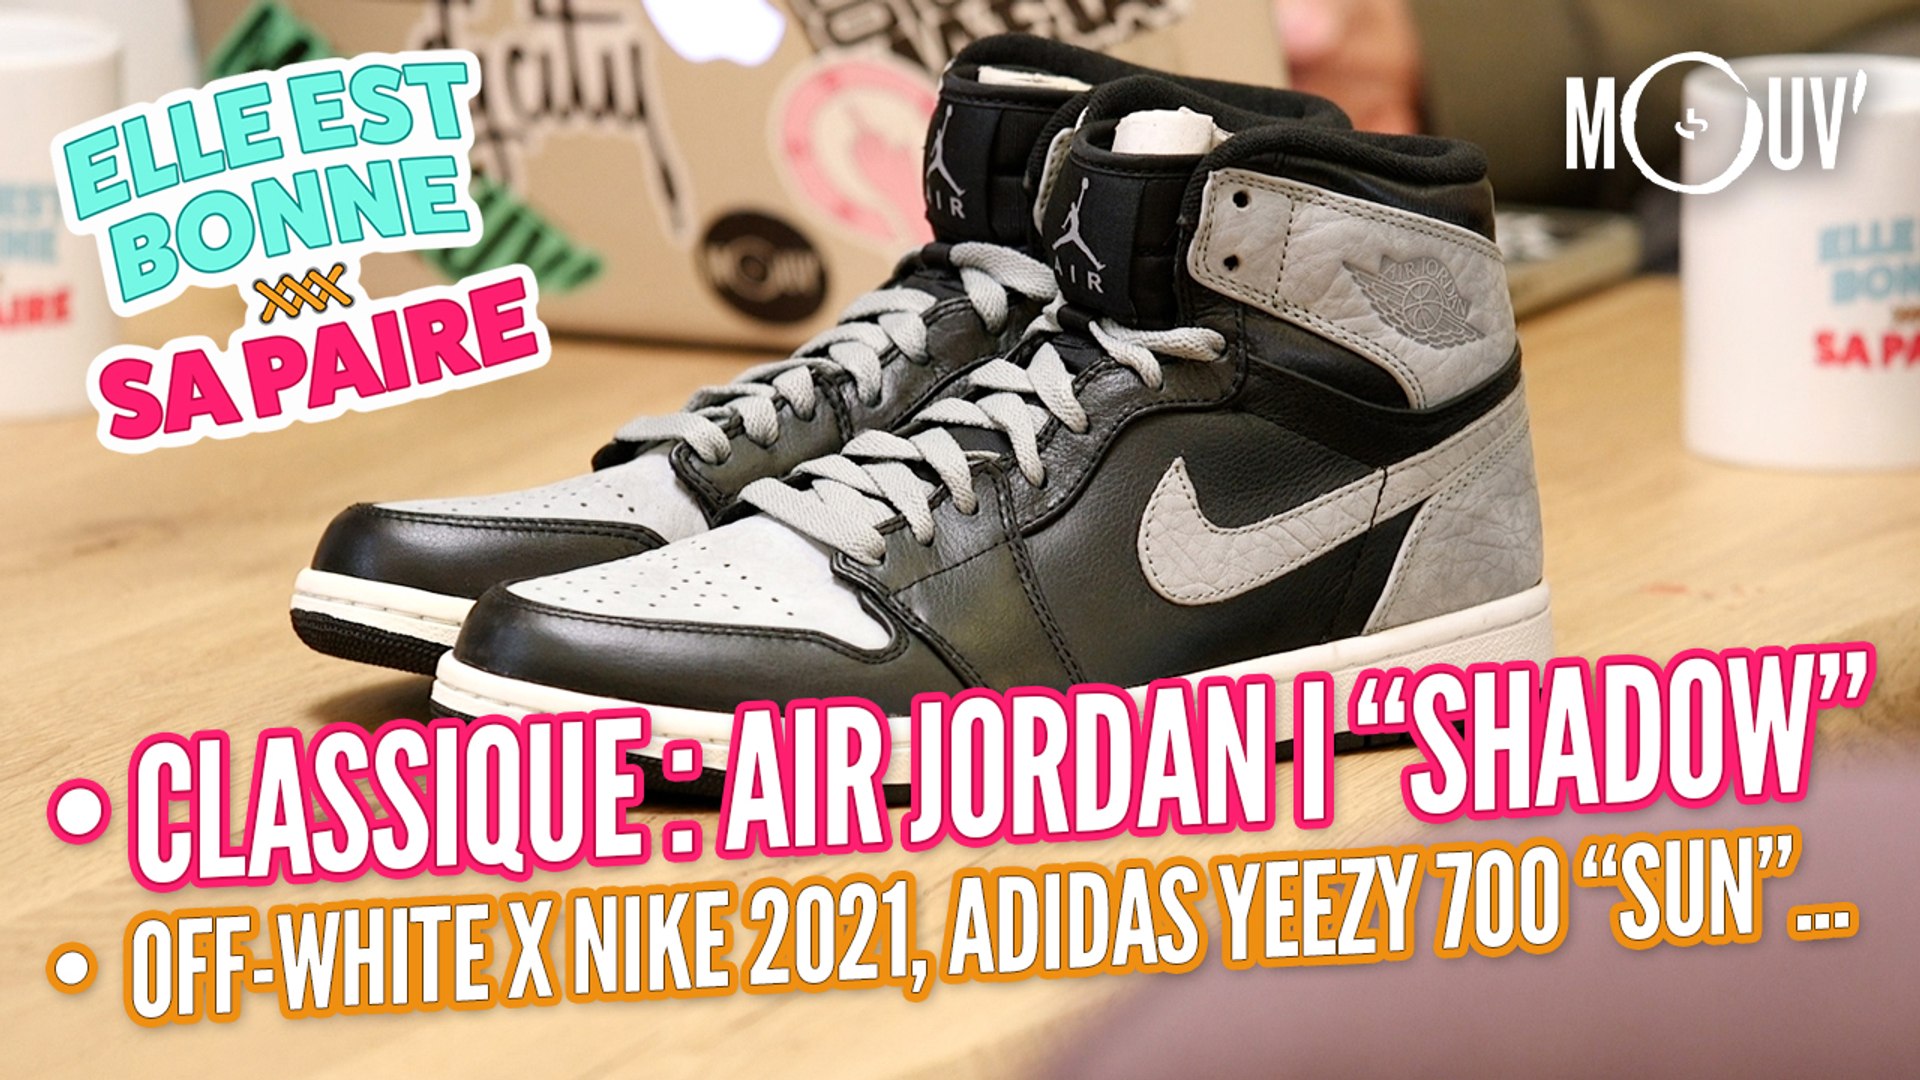 Air Jordan I "Shadow", Off-White x Nike 2021, Adidas Yeezy Bosst 700  "Sun"... - Vidéo Dailymotion